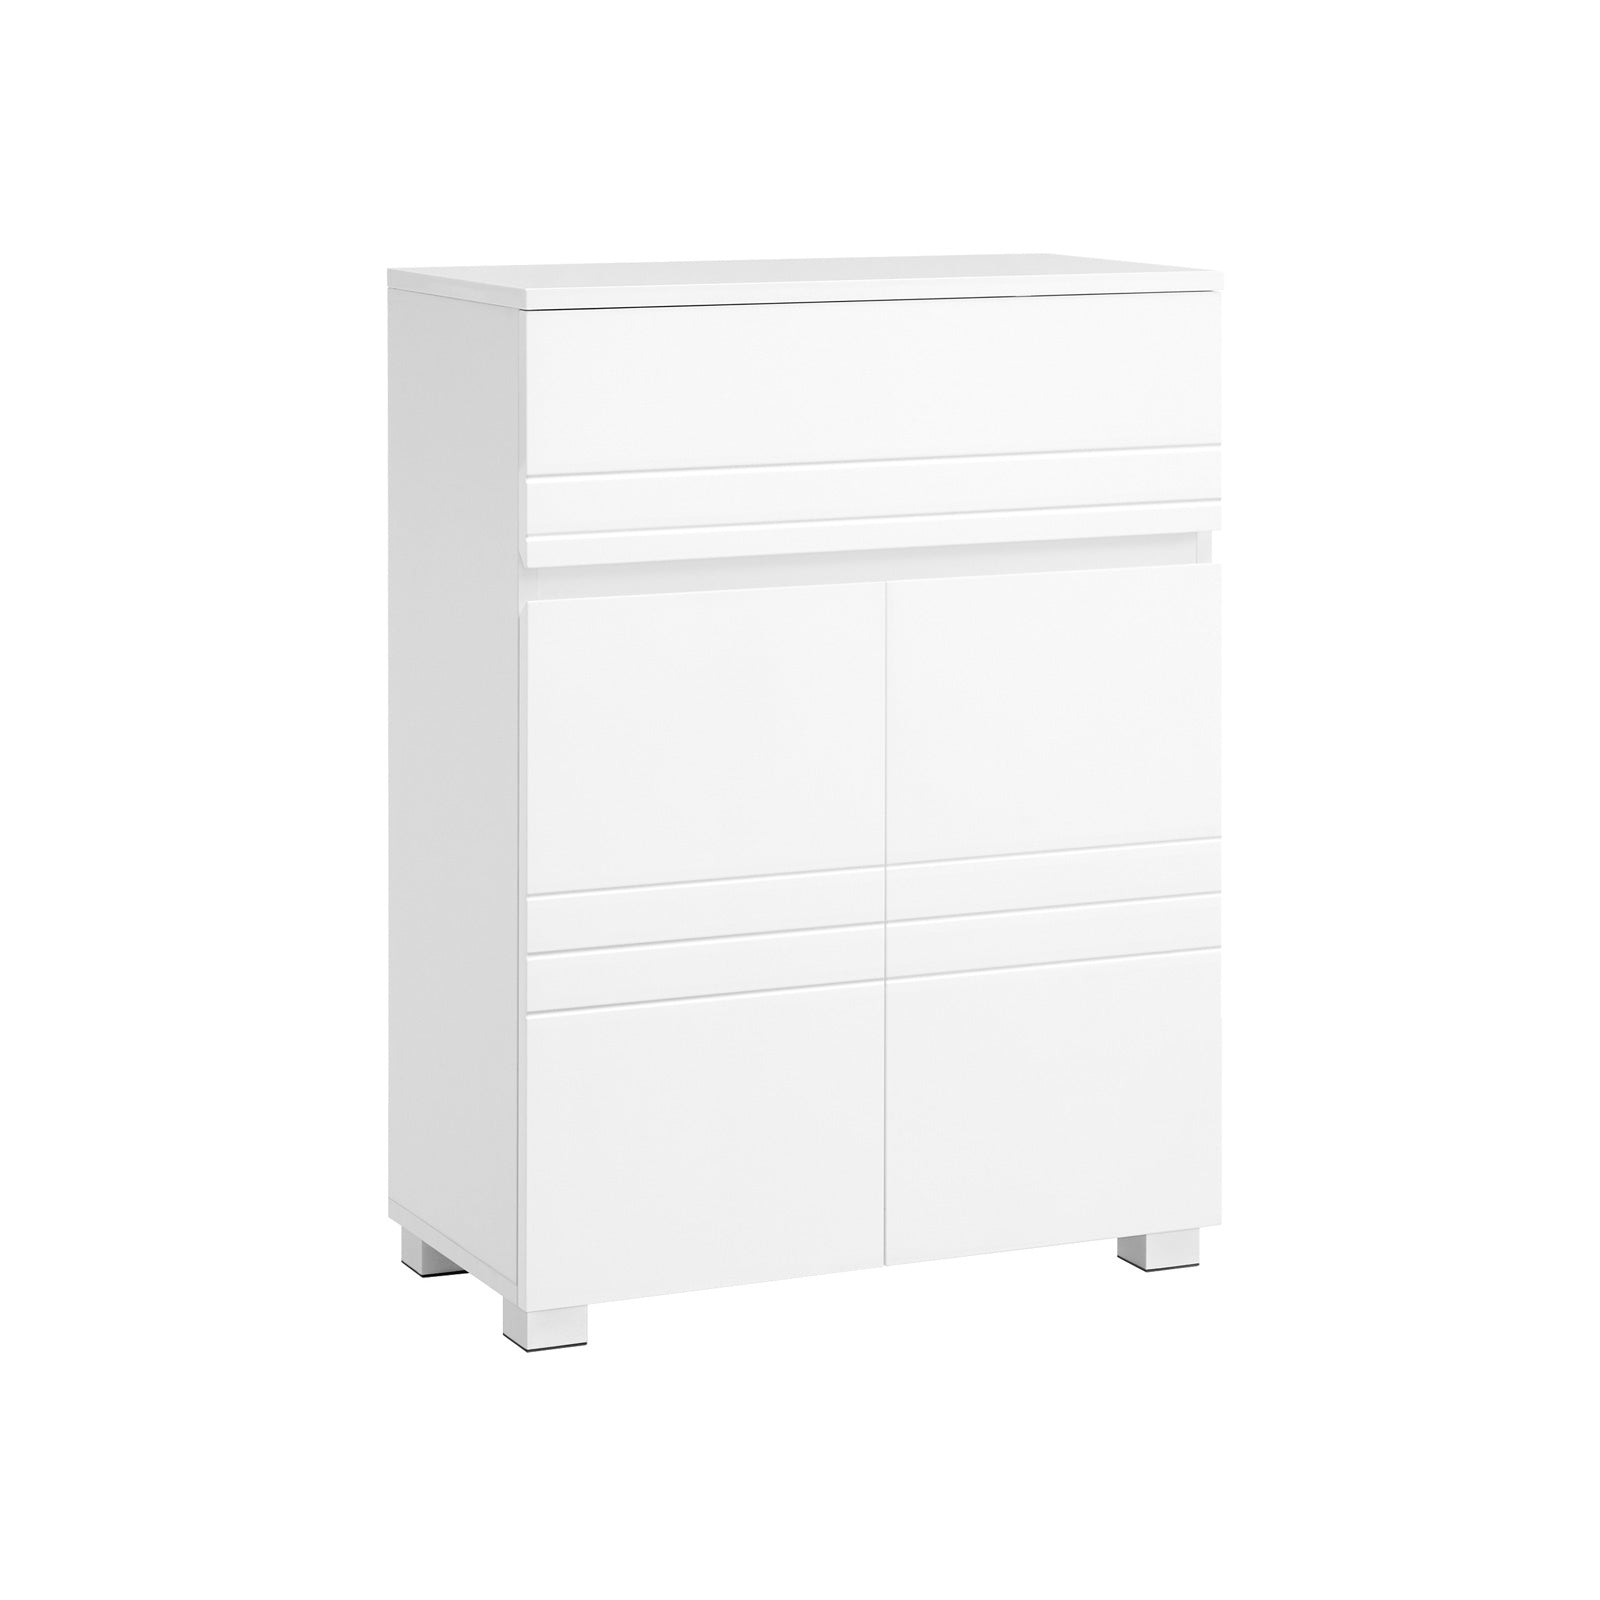 Image of Songmics - vasagle Bathroom Cabinet, Sideboard Cabinet, with Drawer, 2 Doors, Adjustable Shelf, for Hallway, 60 x 30 x 80 cm, White BBK140W01